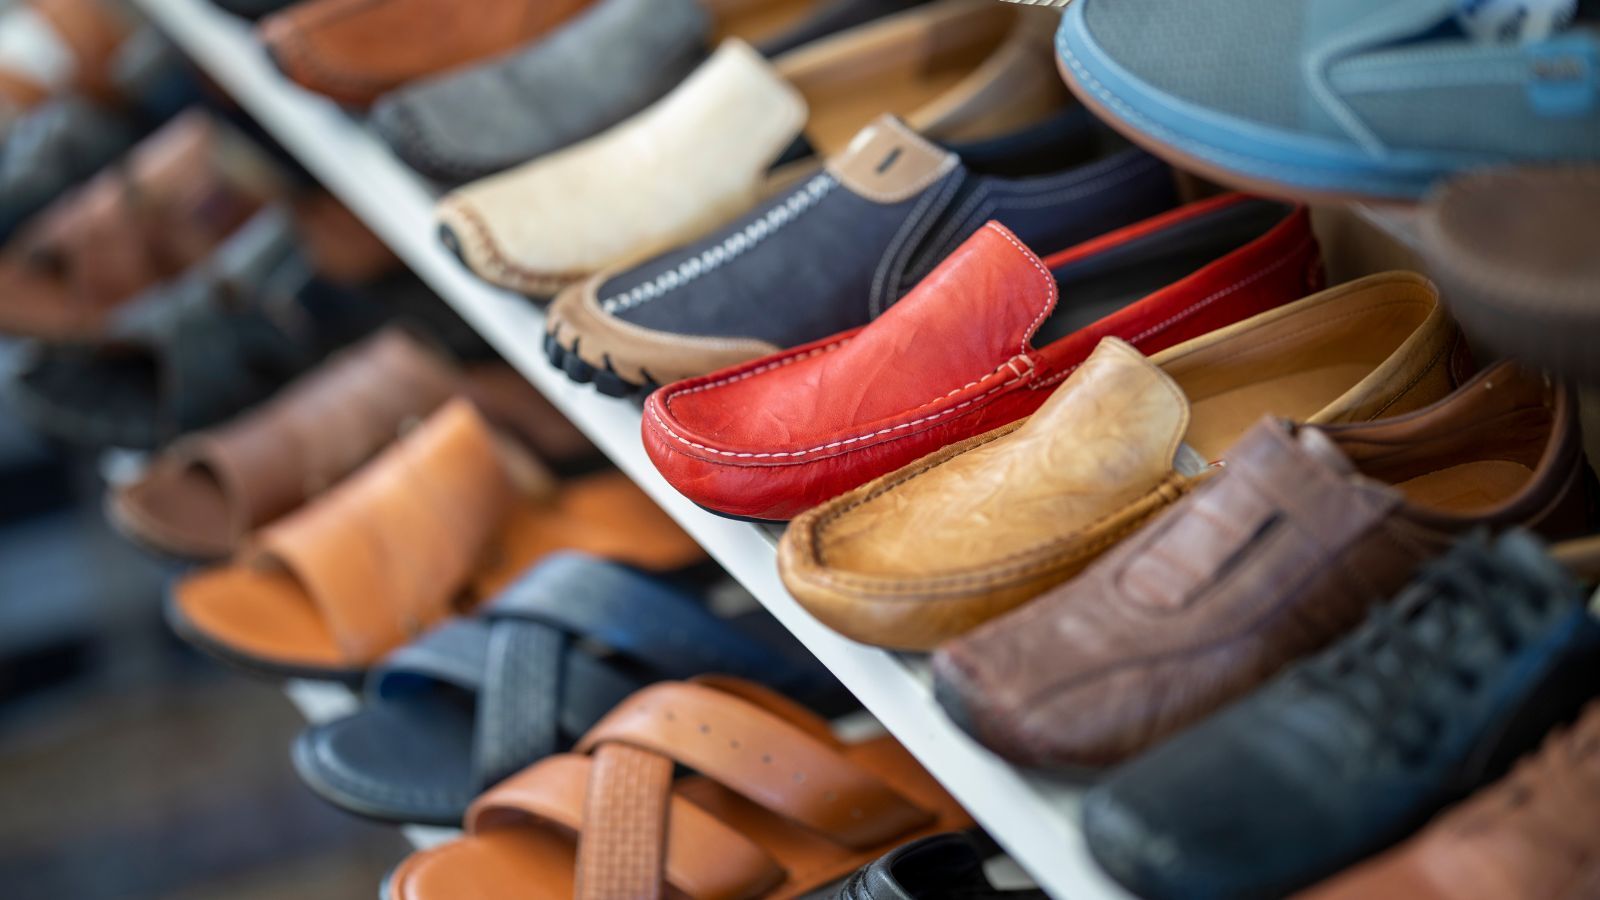 15 Best QVC Footwear Brands for Summer